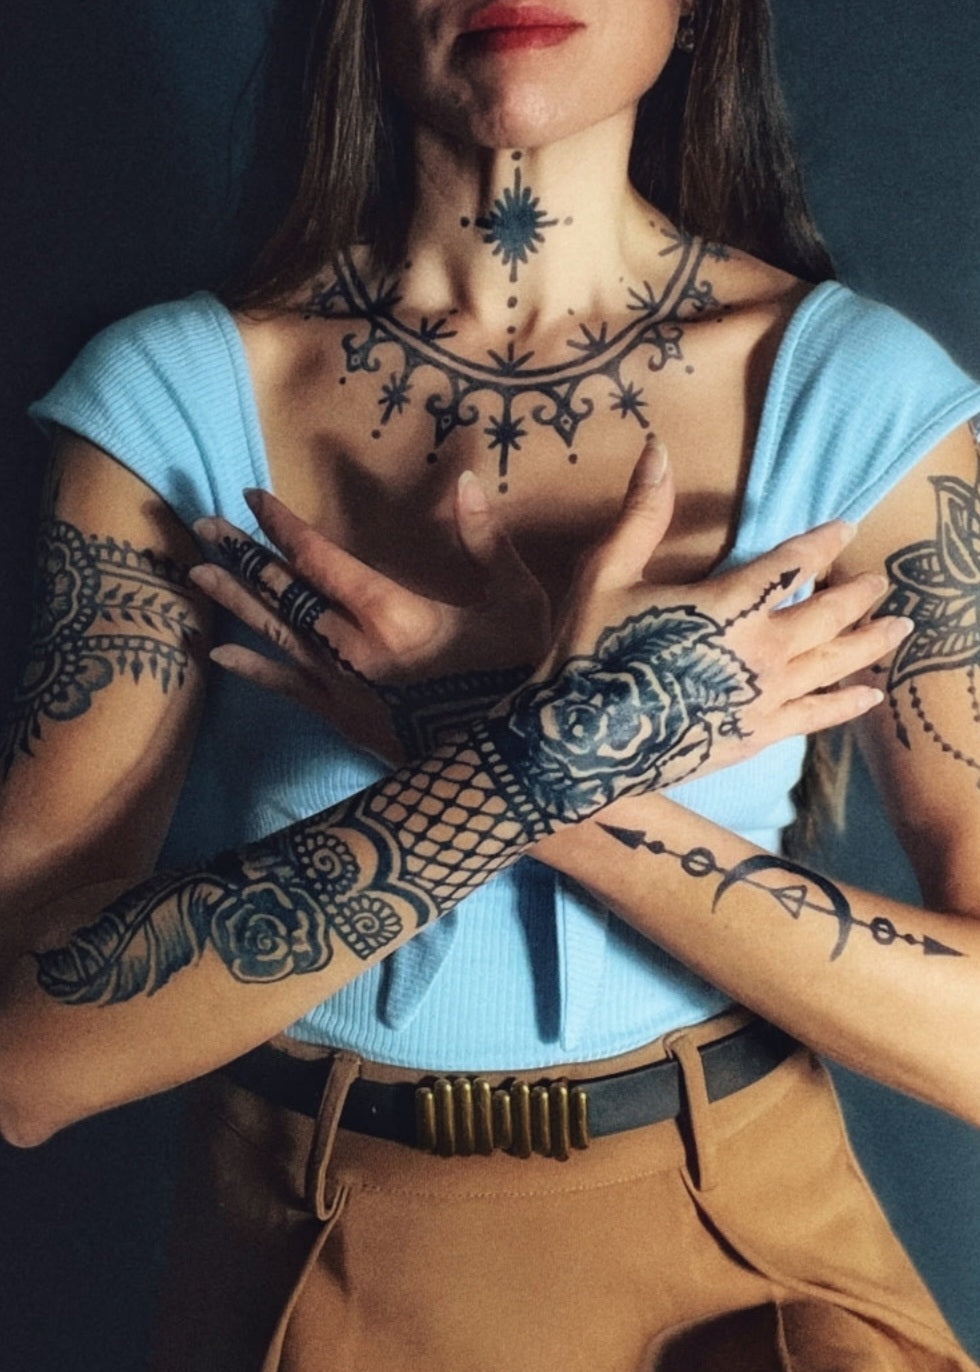 Hand band tattoo design || | Forearm band tattoos, Band tattoo designs, Arm  band tattoo